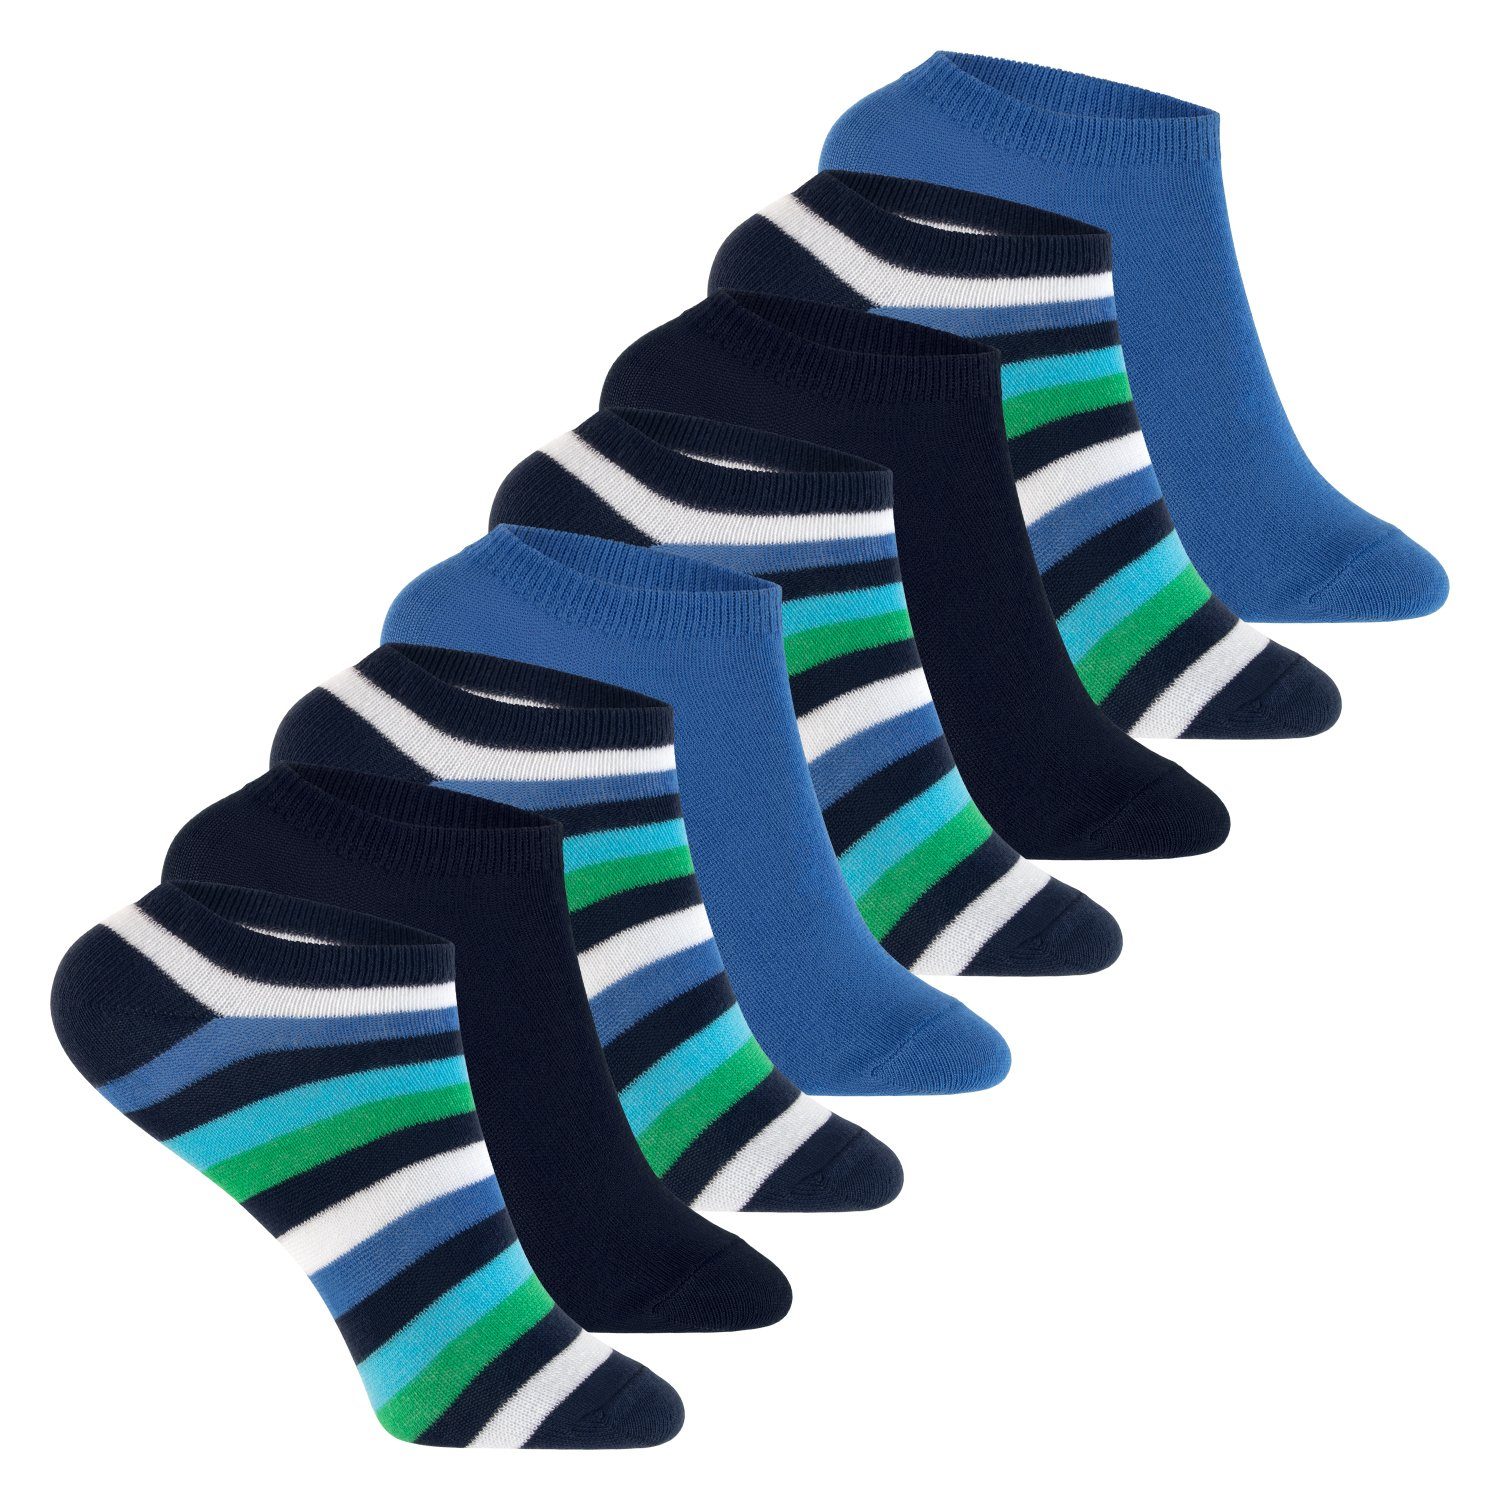 Footstar Kurzsocken Kinder Sneaker Socken (8 Paar) für Mädchen & Jungen, bunt Blau-Grün